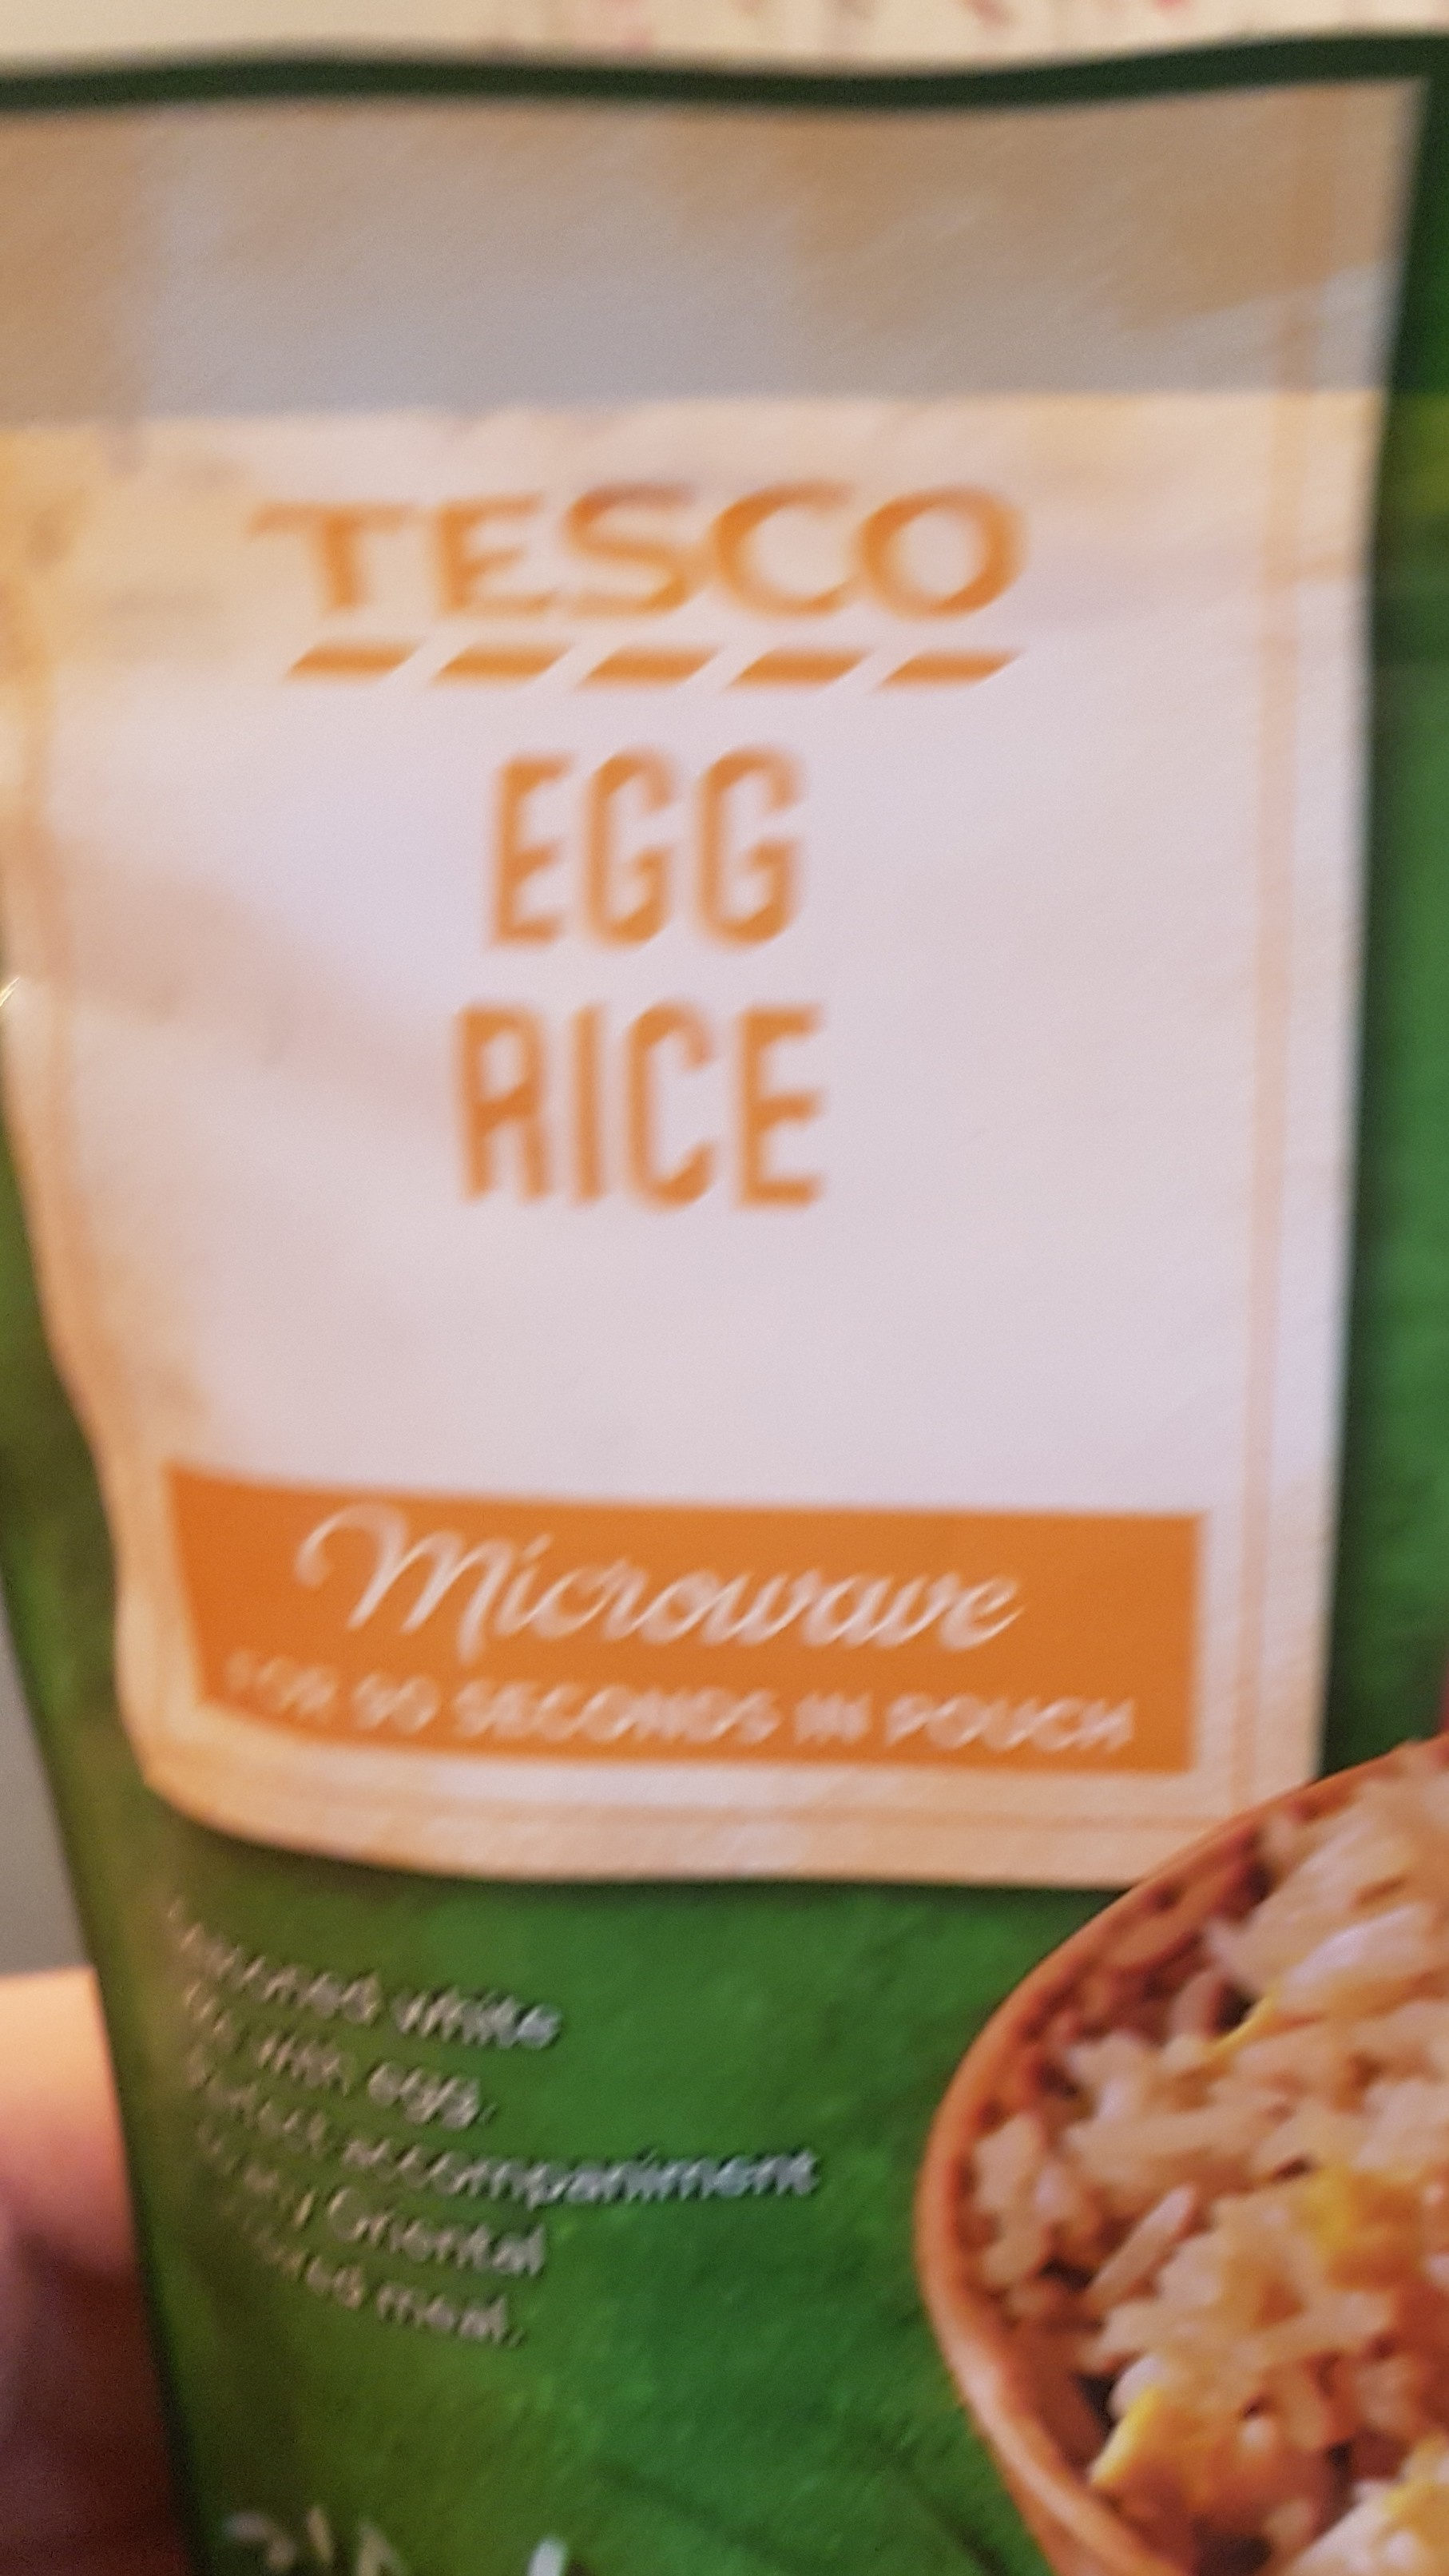 egg rice - Product - en